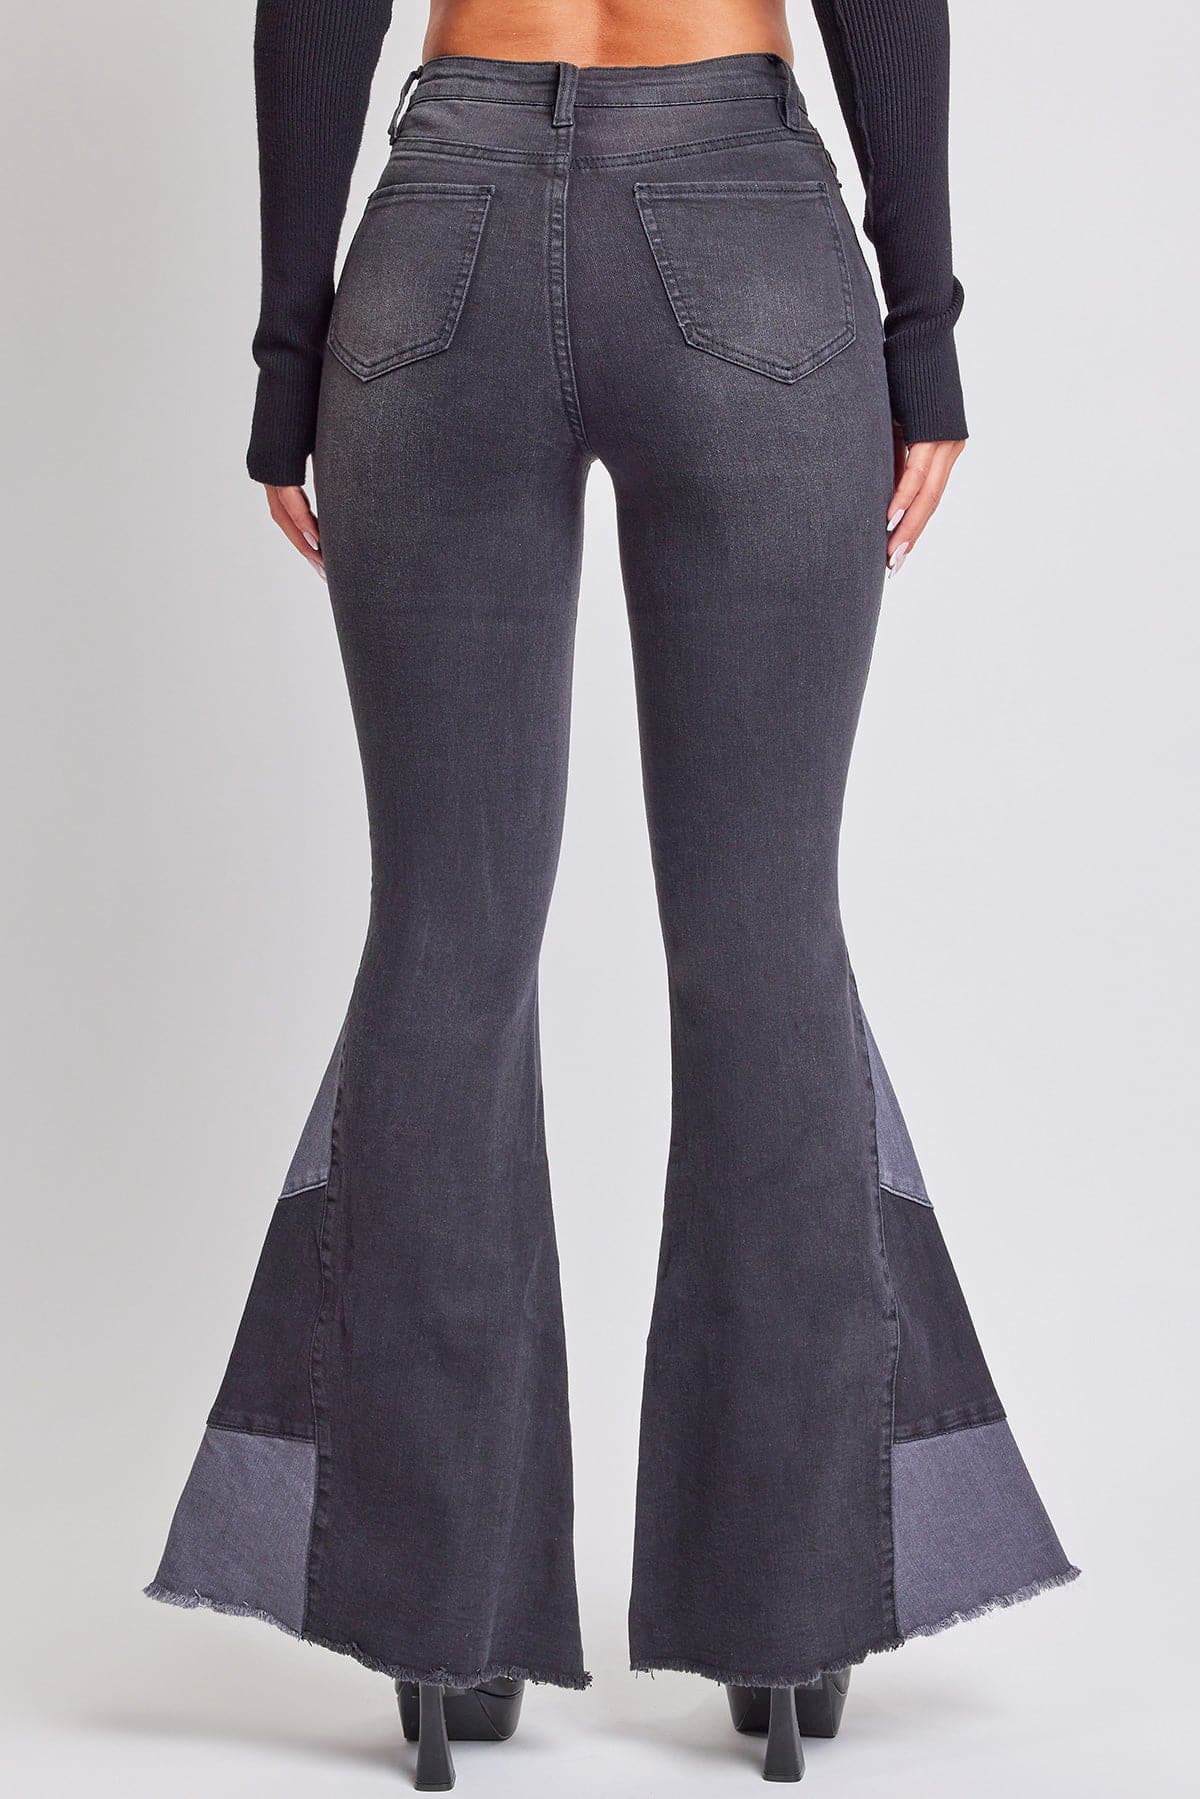 Women's Sustainable Block Panel Flare Jeans